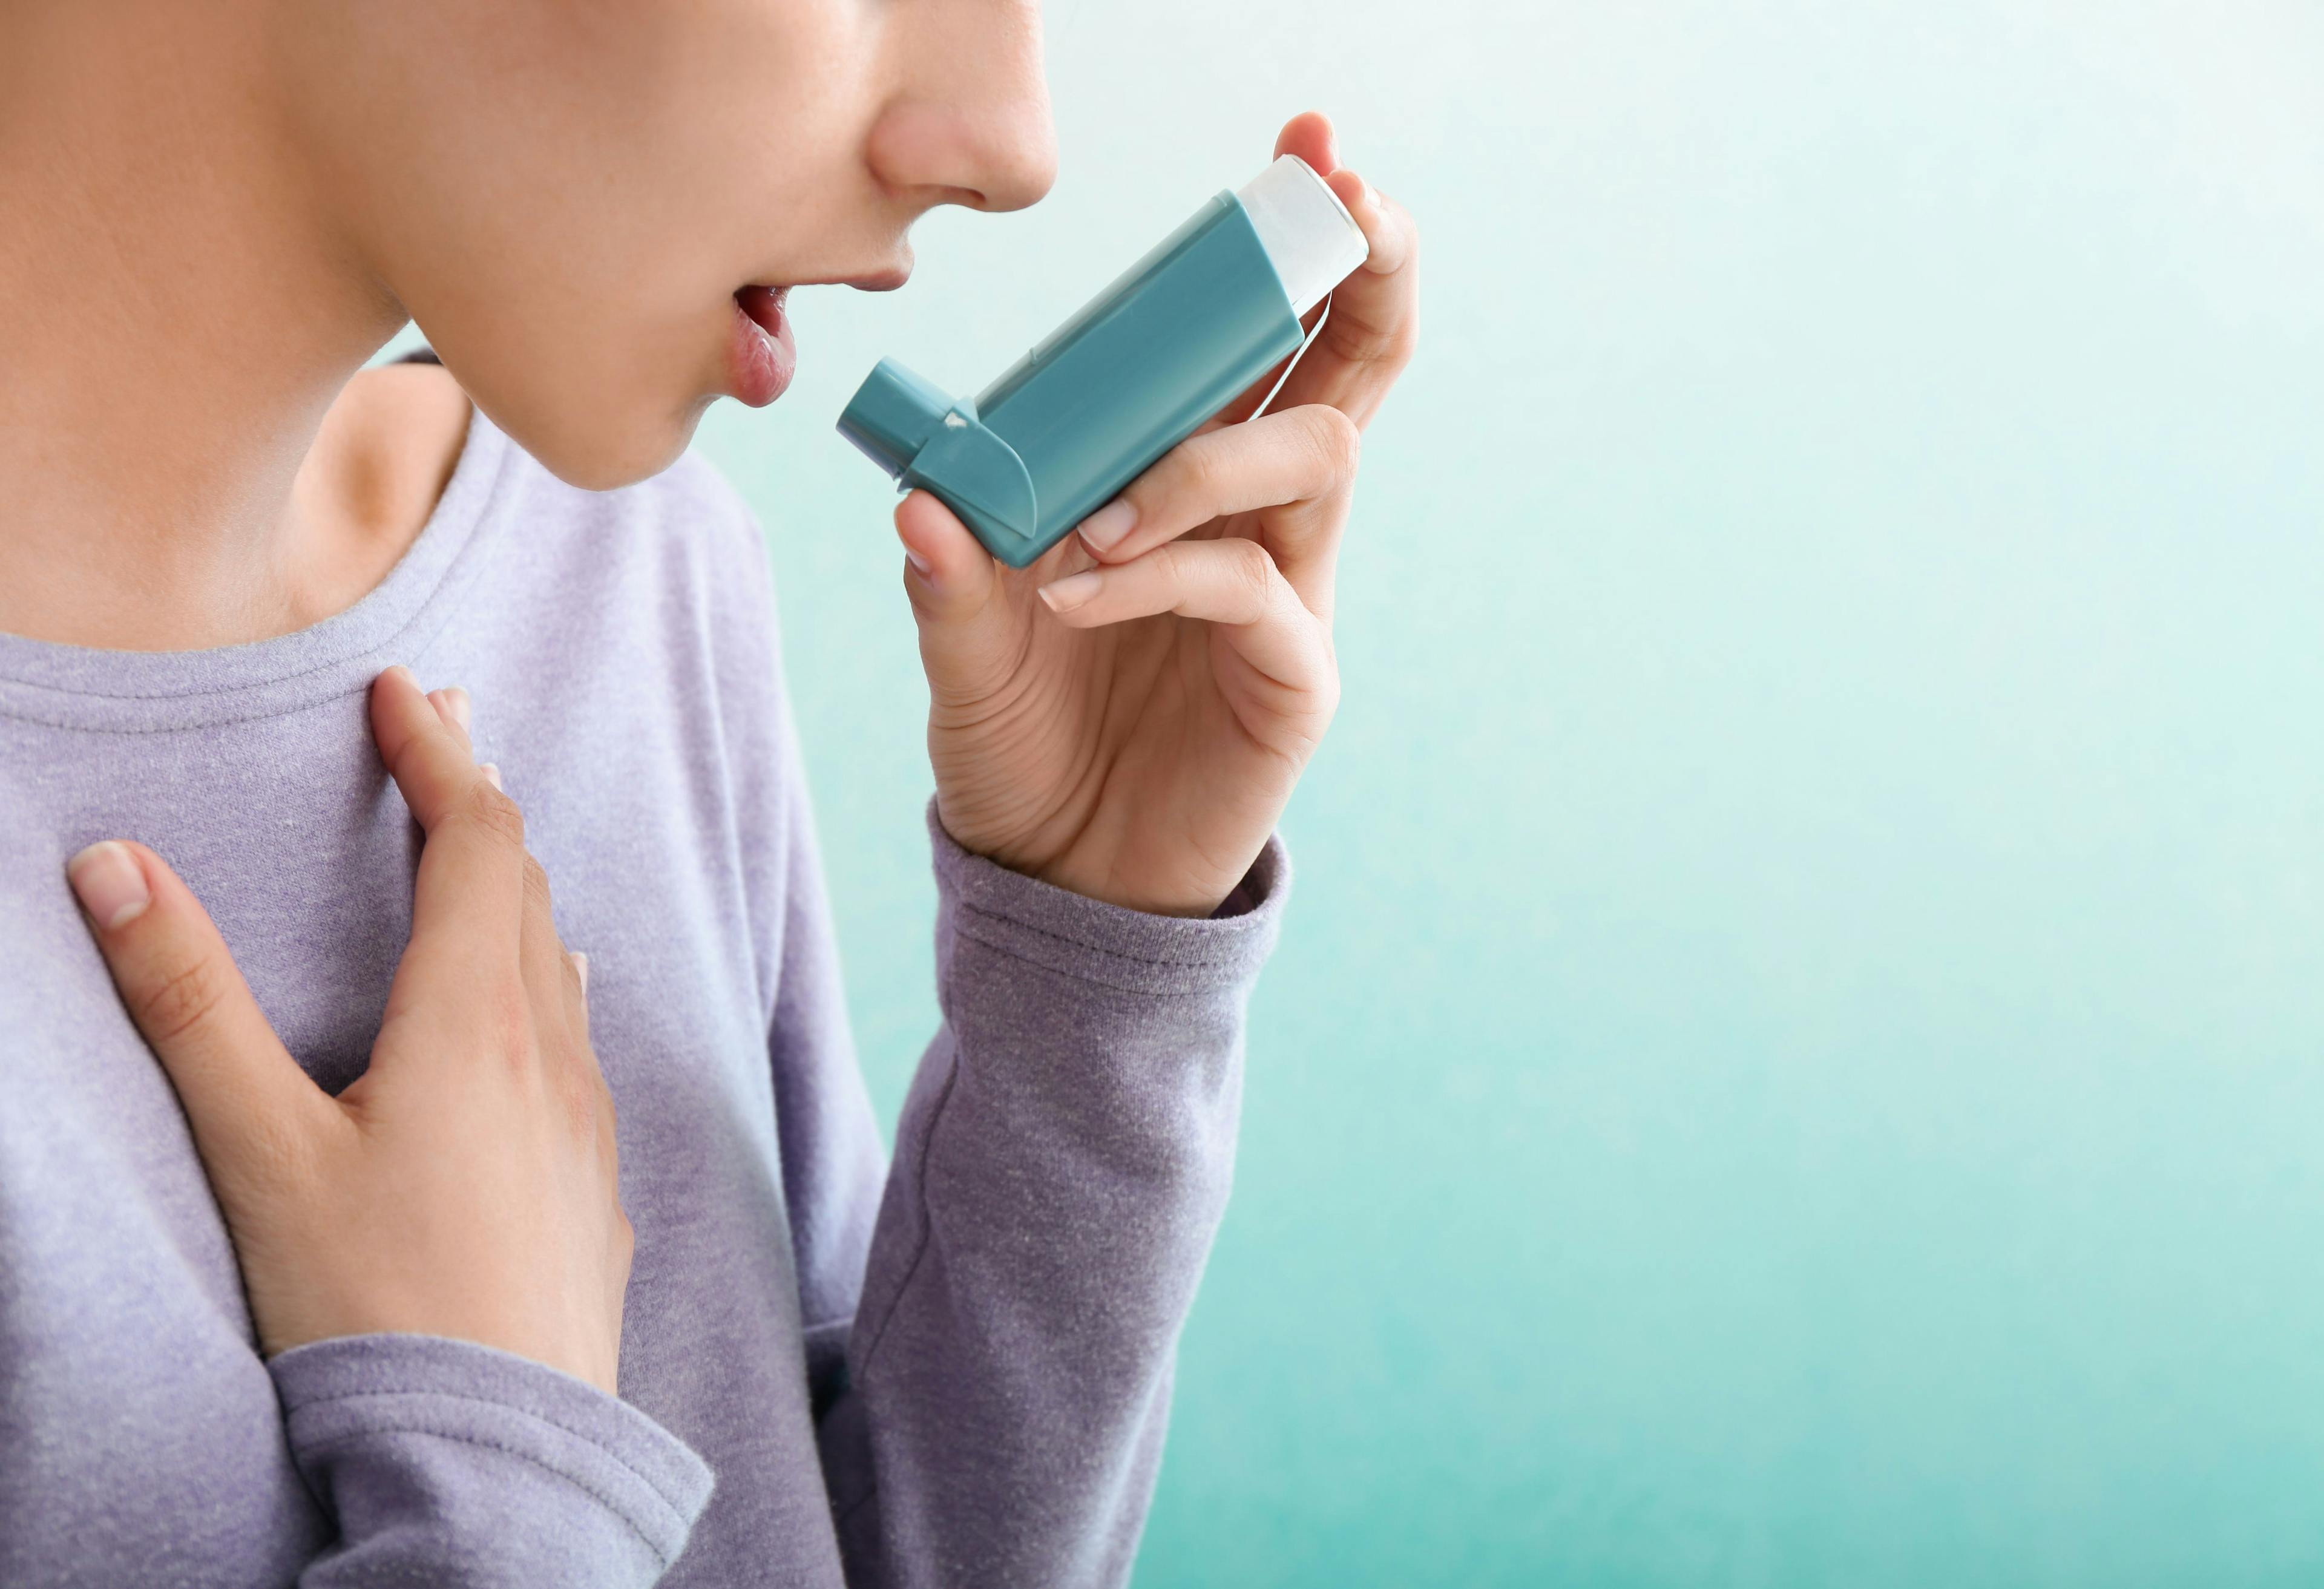 Woman using an asthma inhaler | Image credit: Pixel-Shot | stock.adobe.com